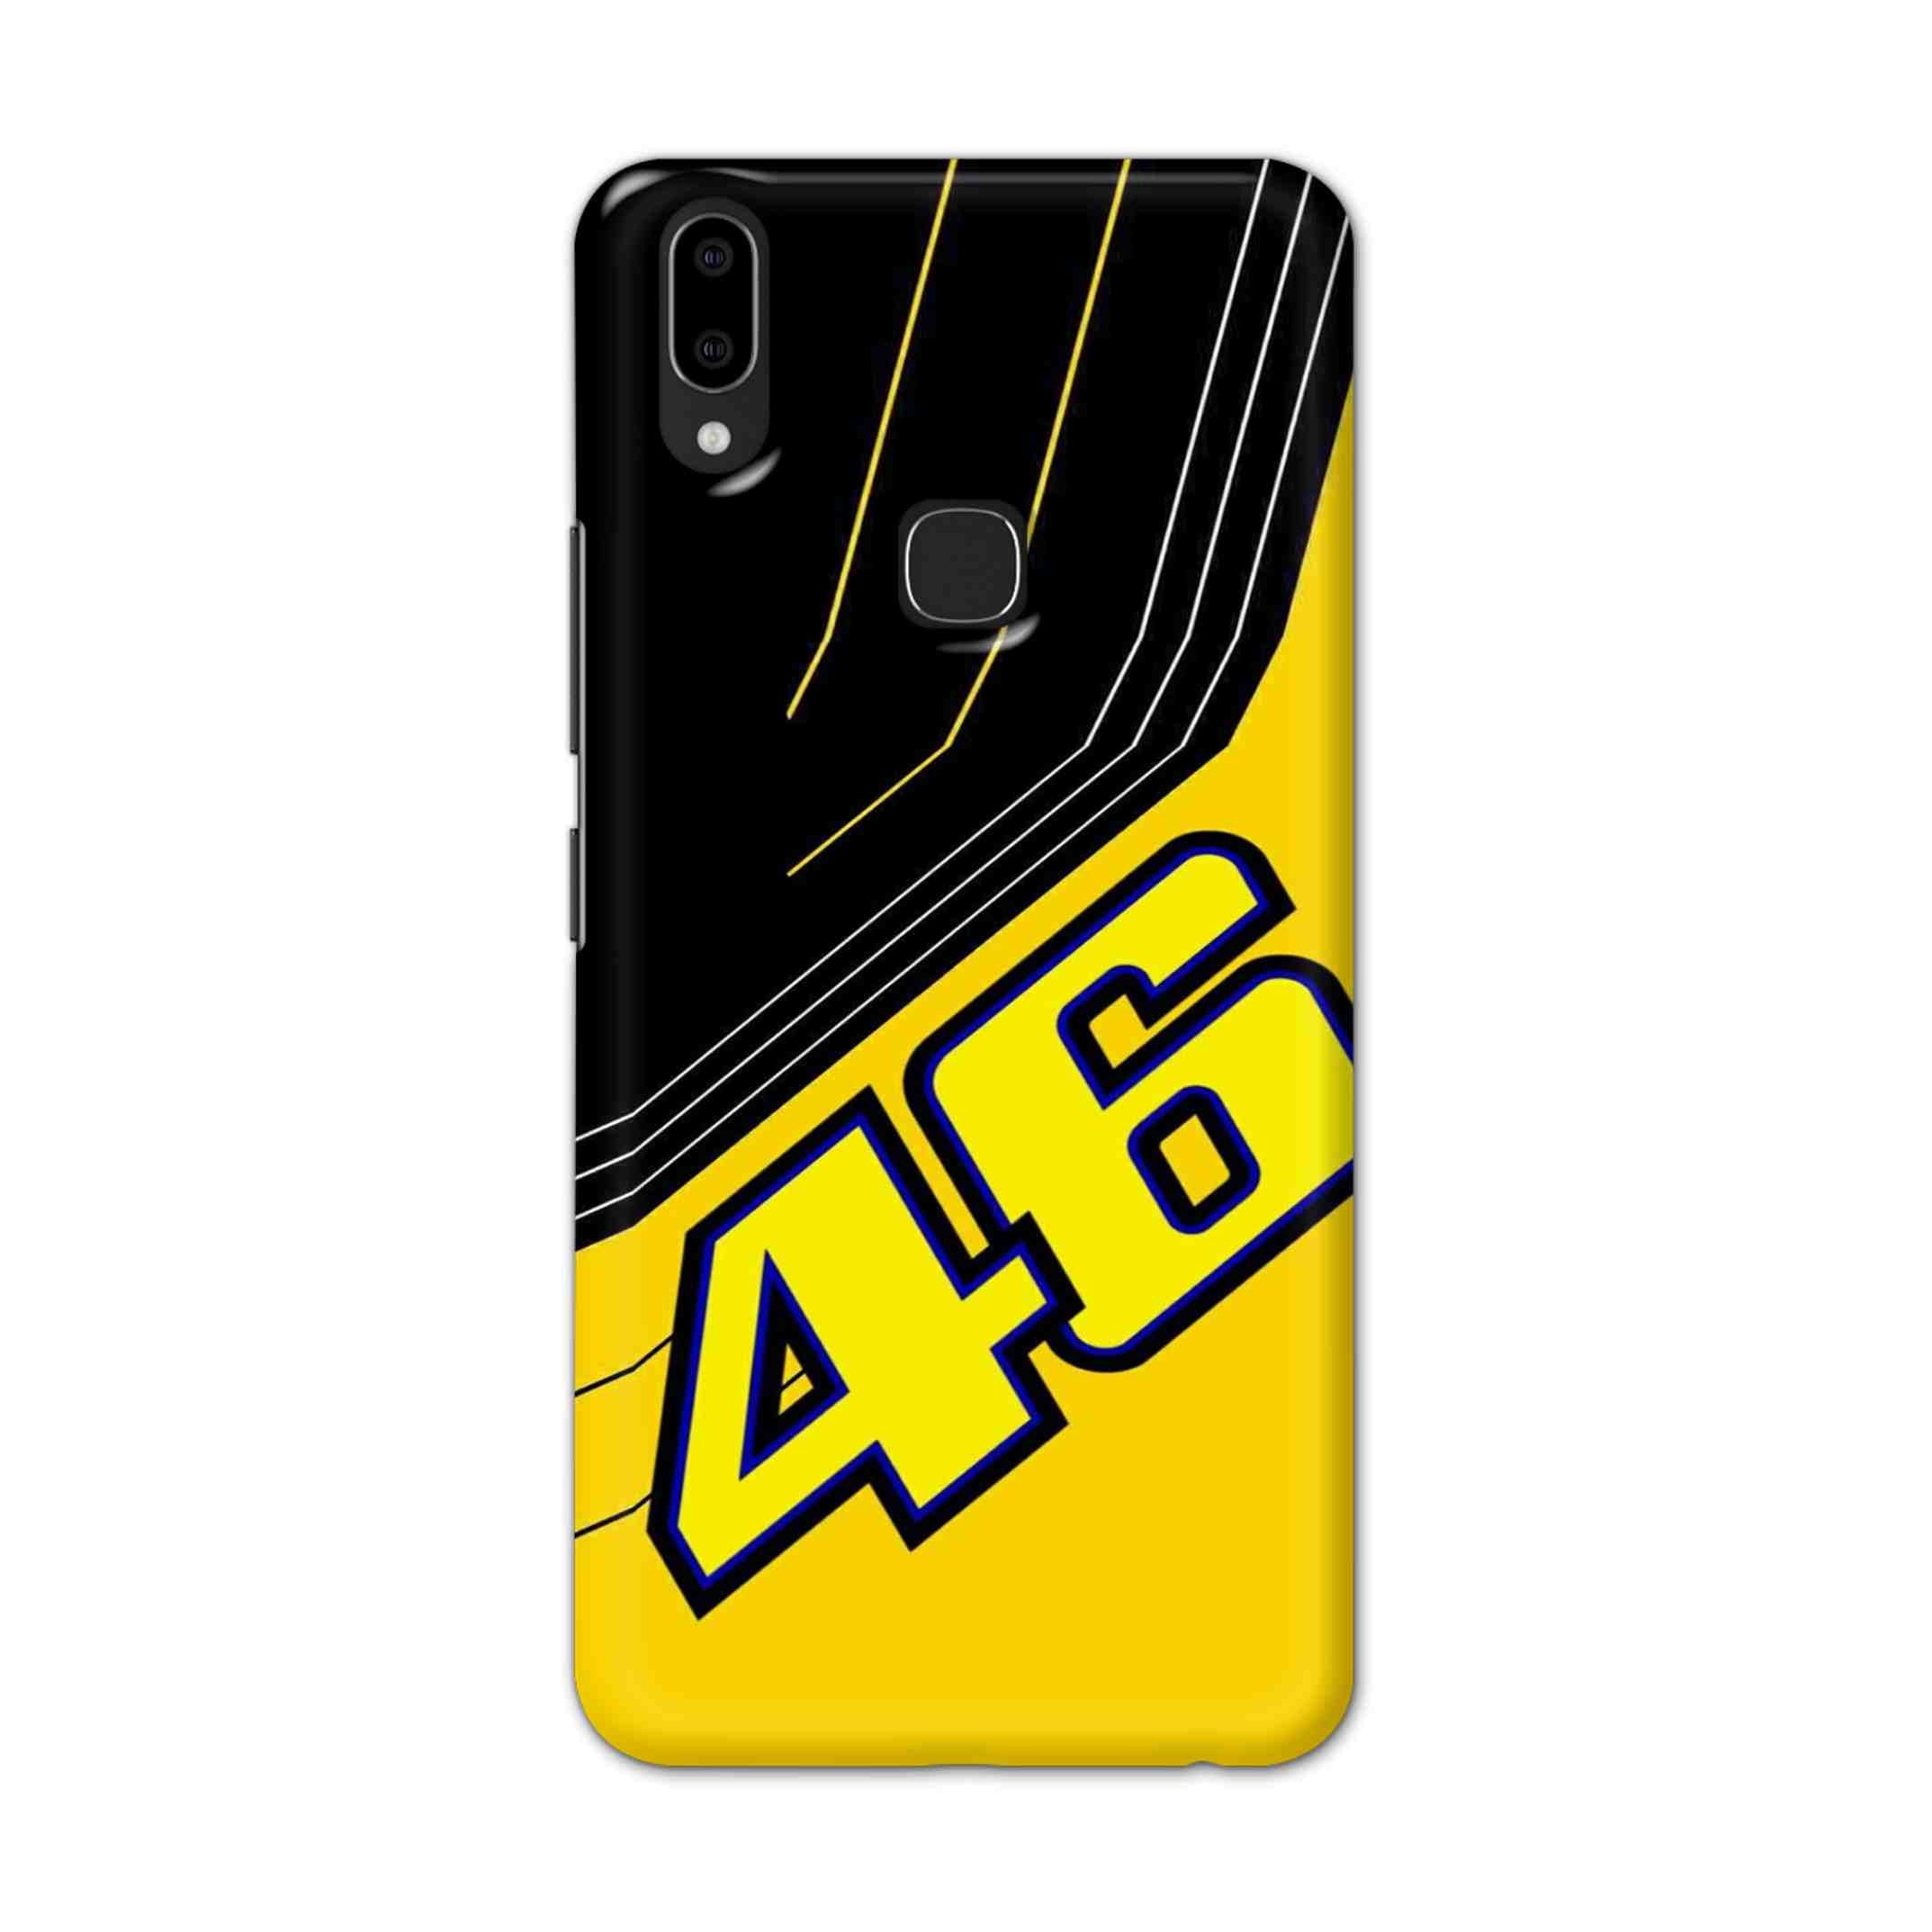 Buy 46 Hard Back Mobile Phone Case Cover For Vivo V9 / V9 Youth Online